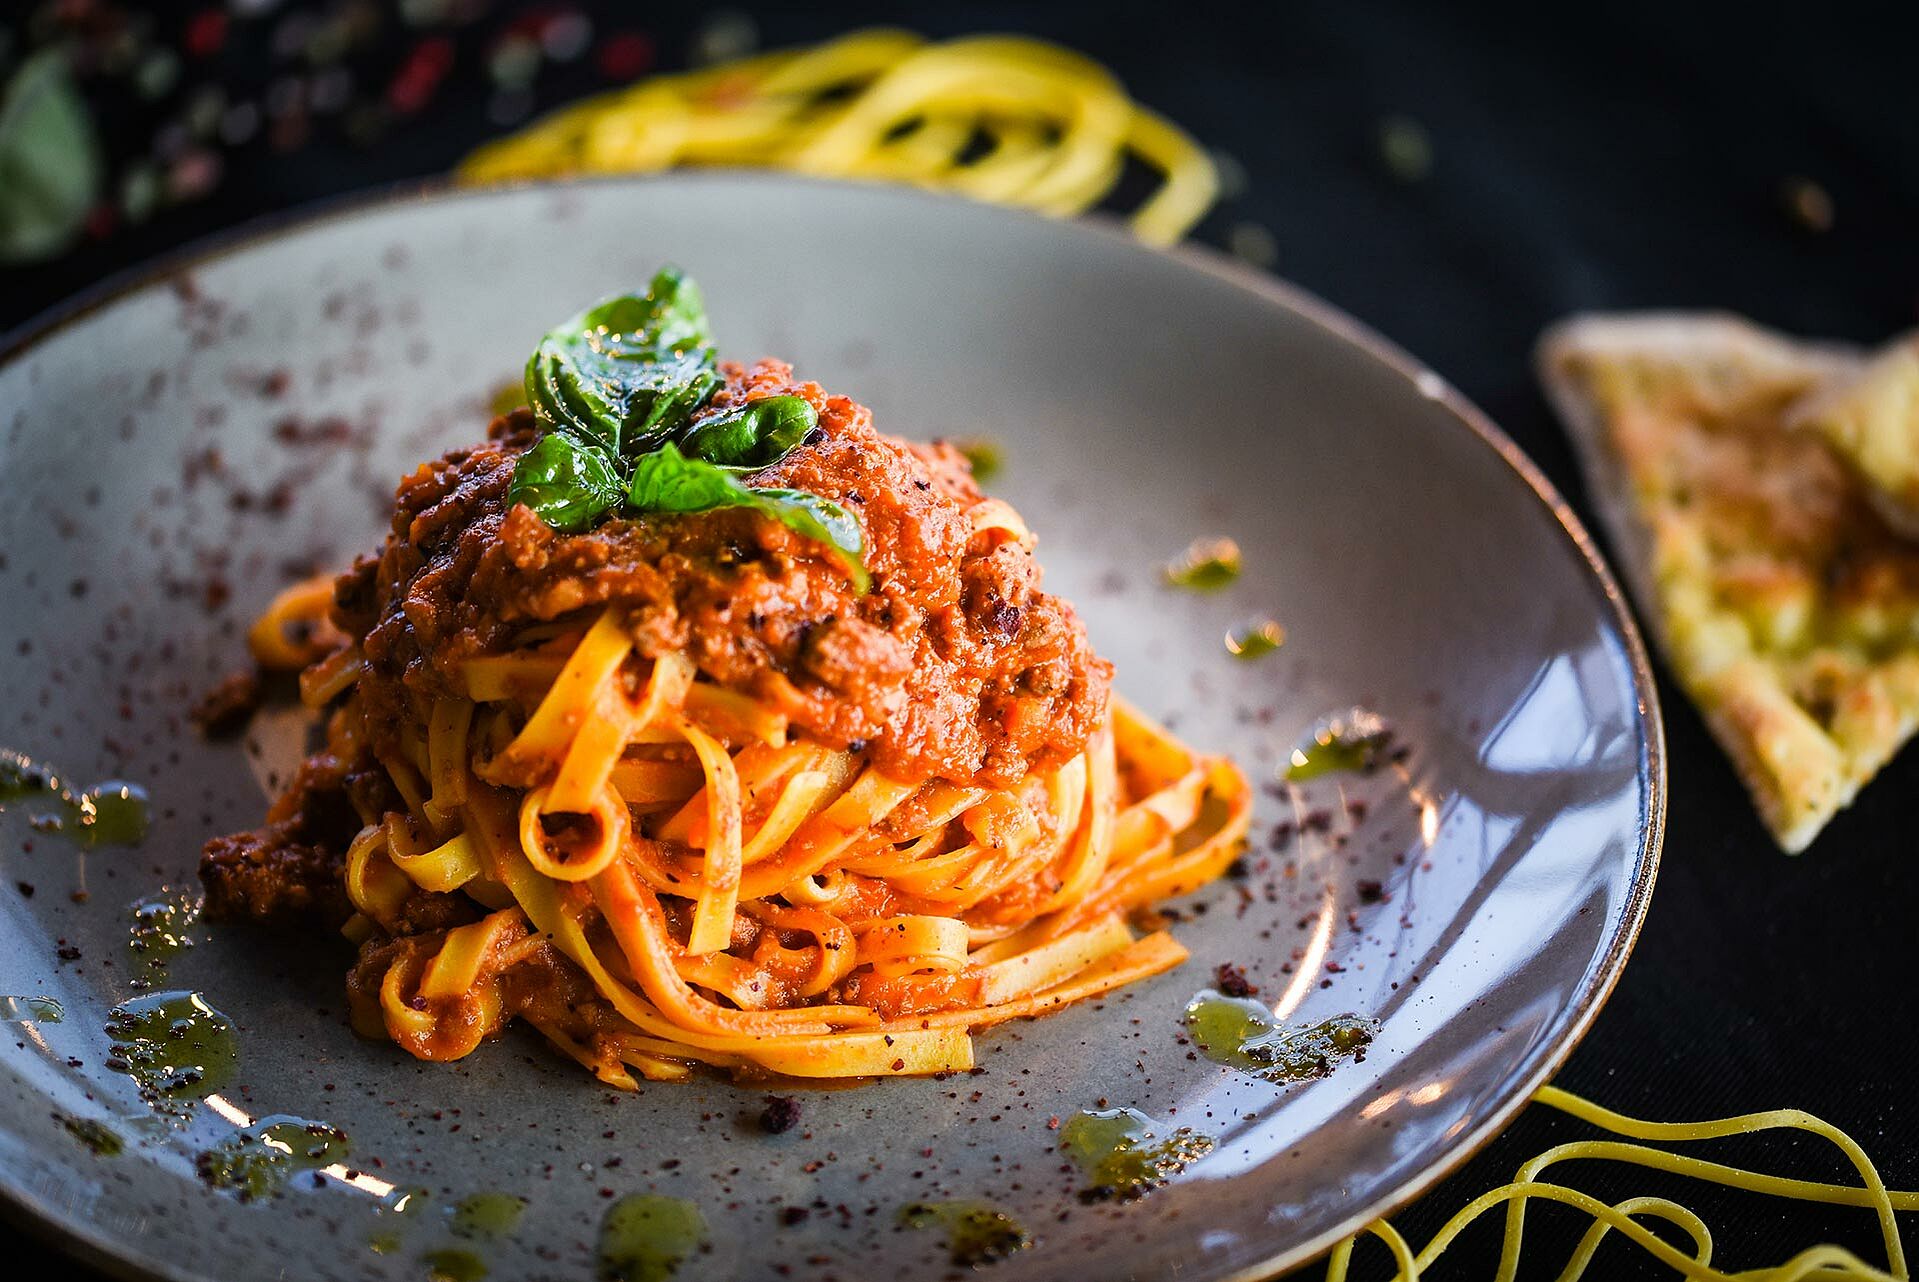 Spaghetti al ragu bologneseon a grey plate.